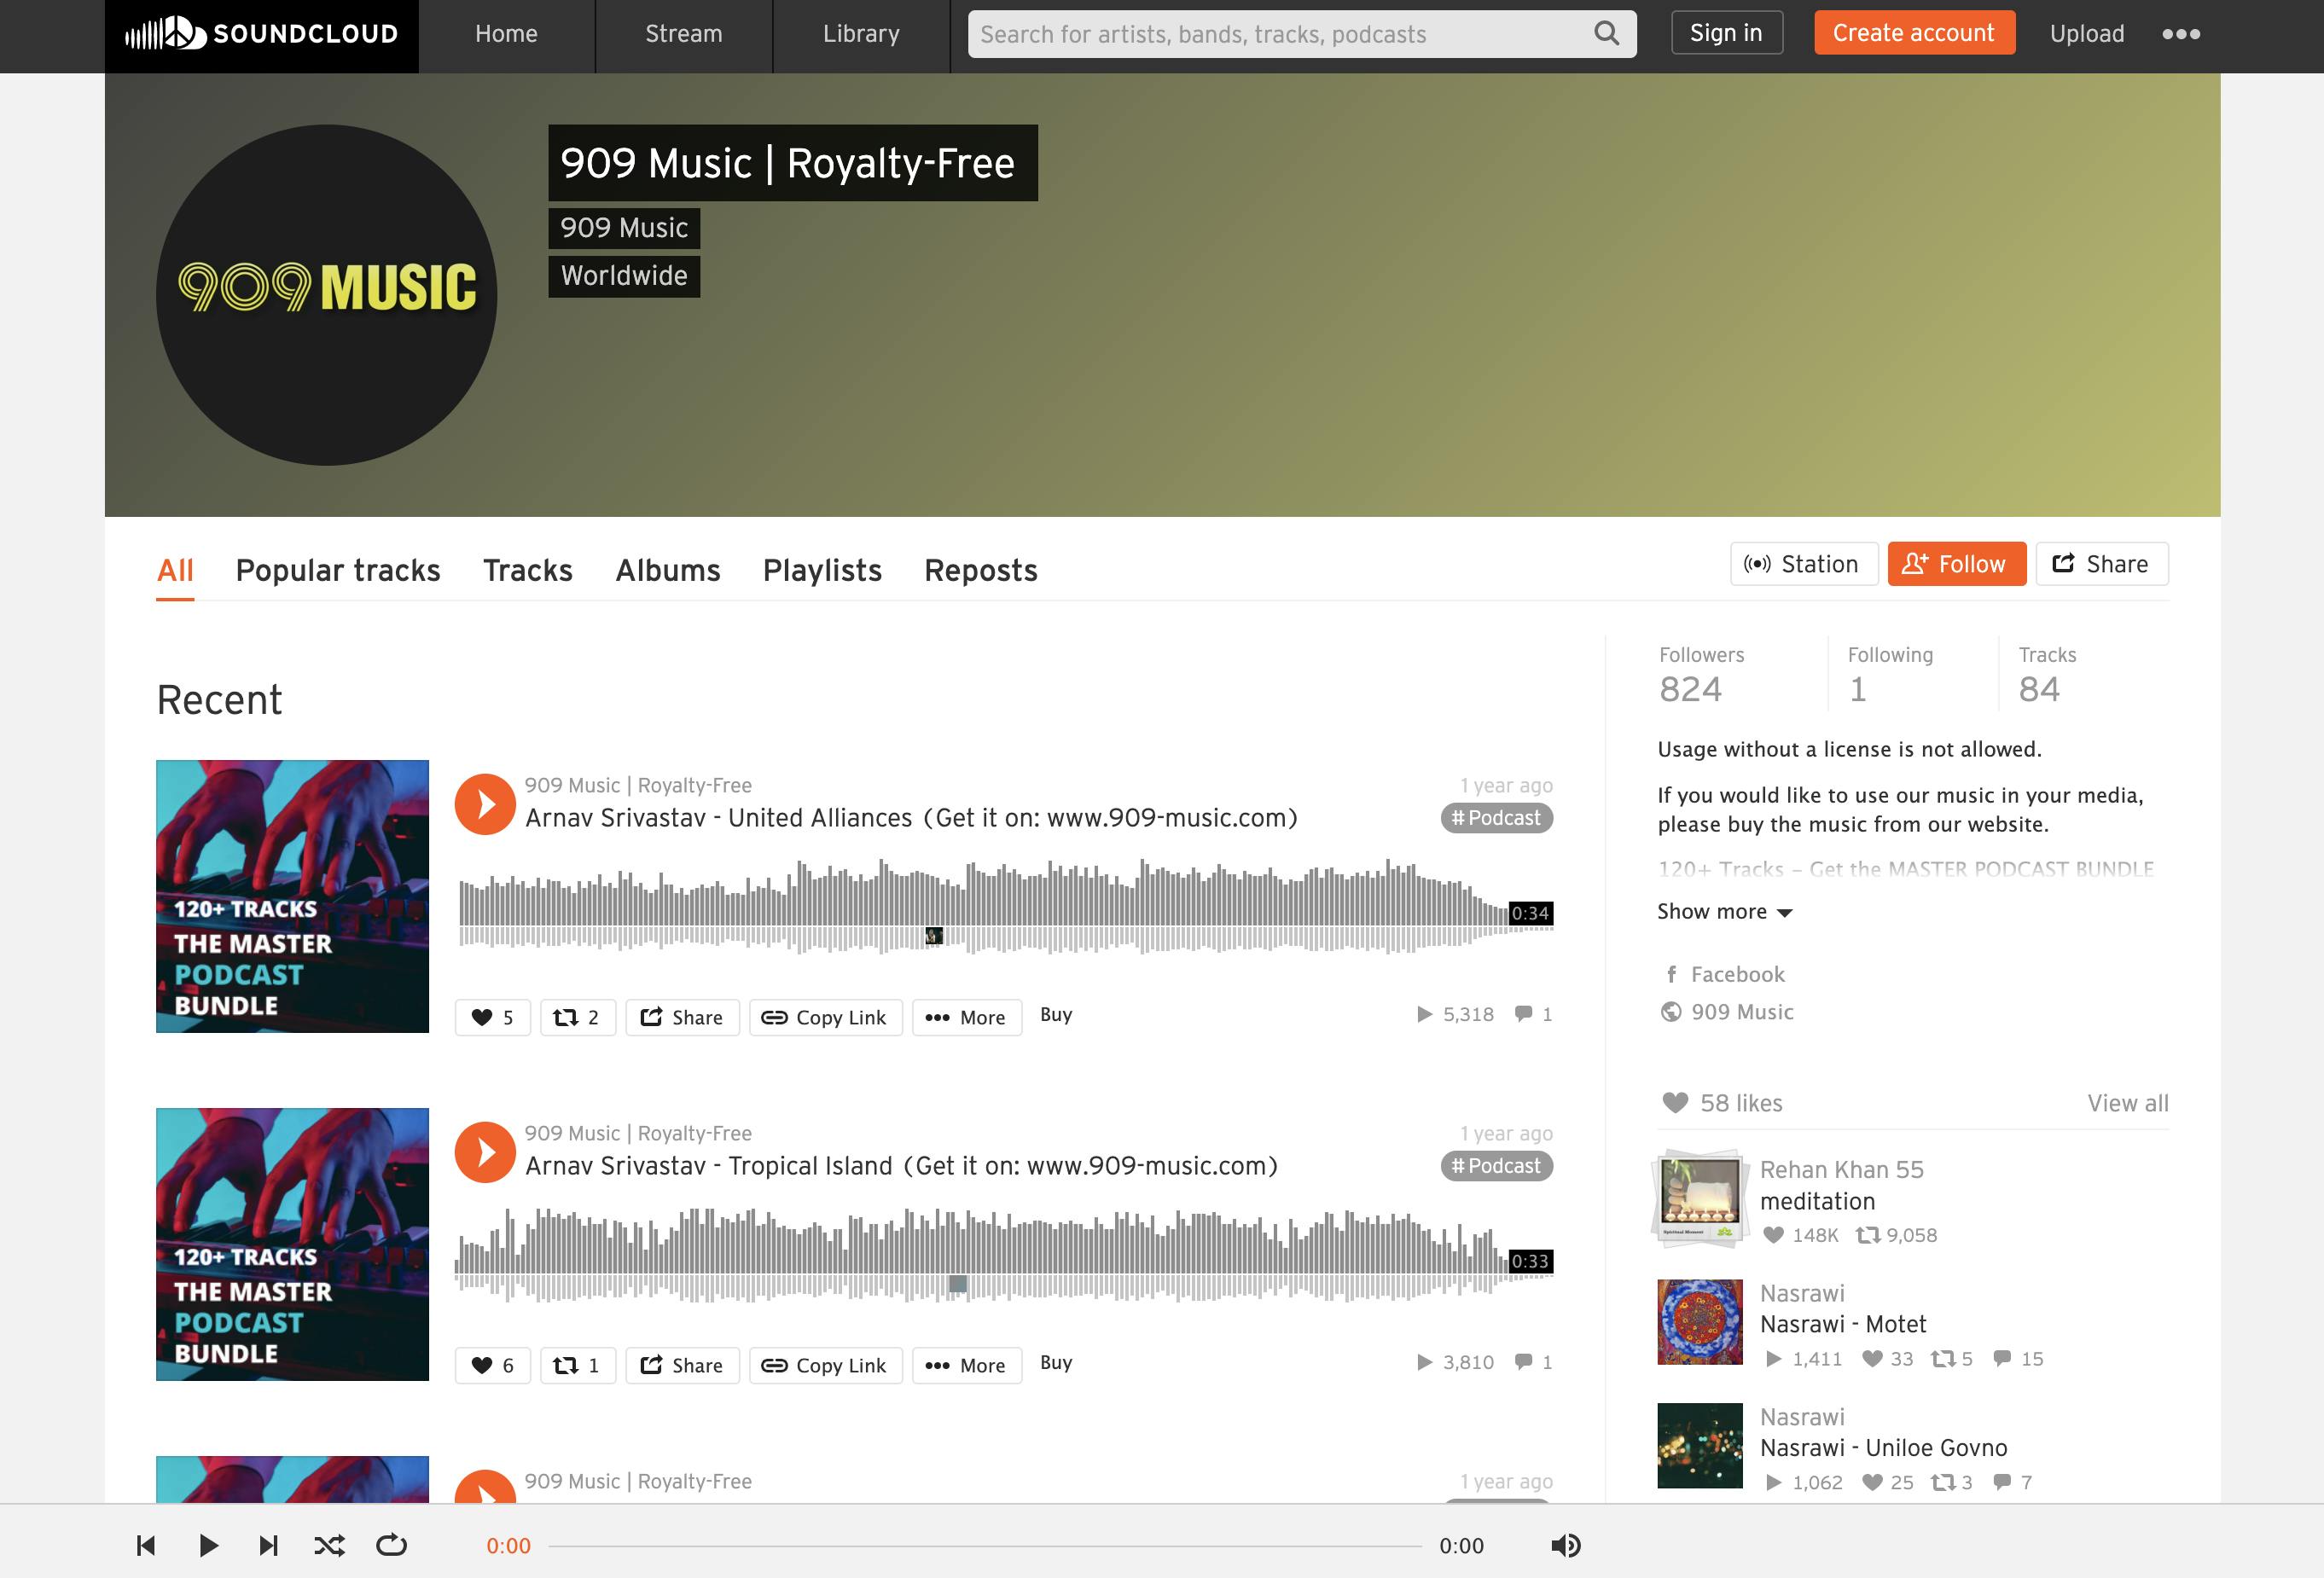 909 Music on Soundcloud